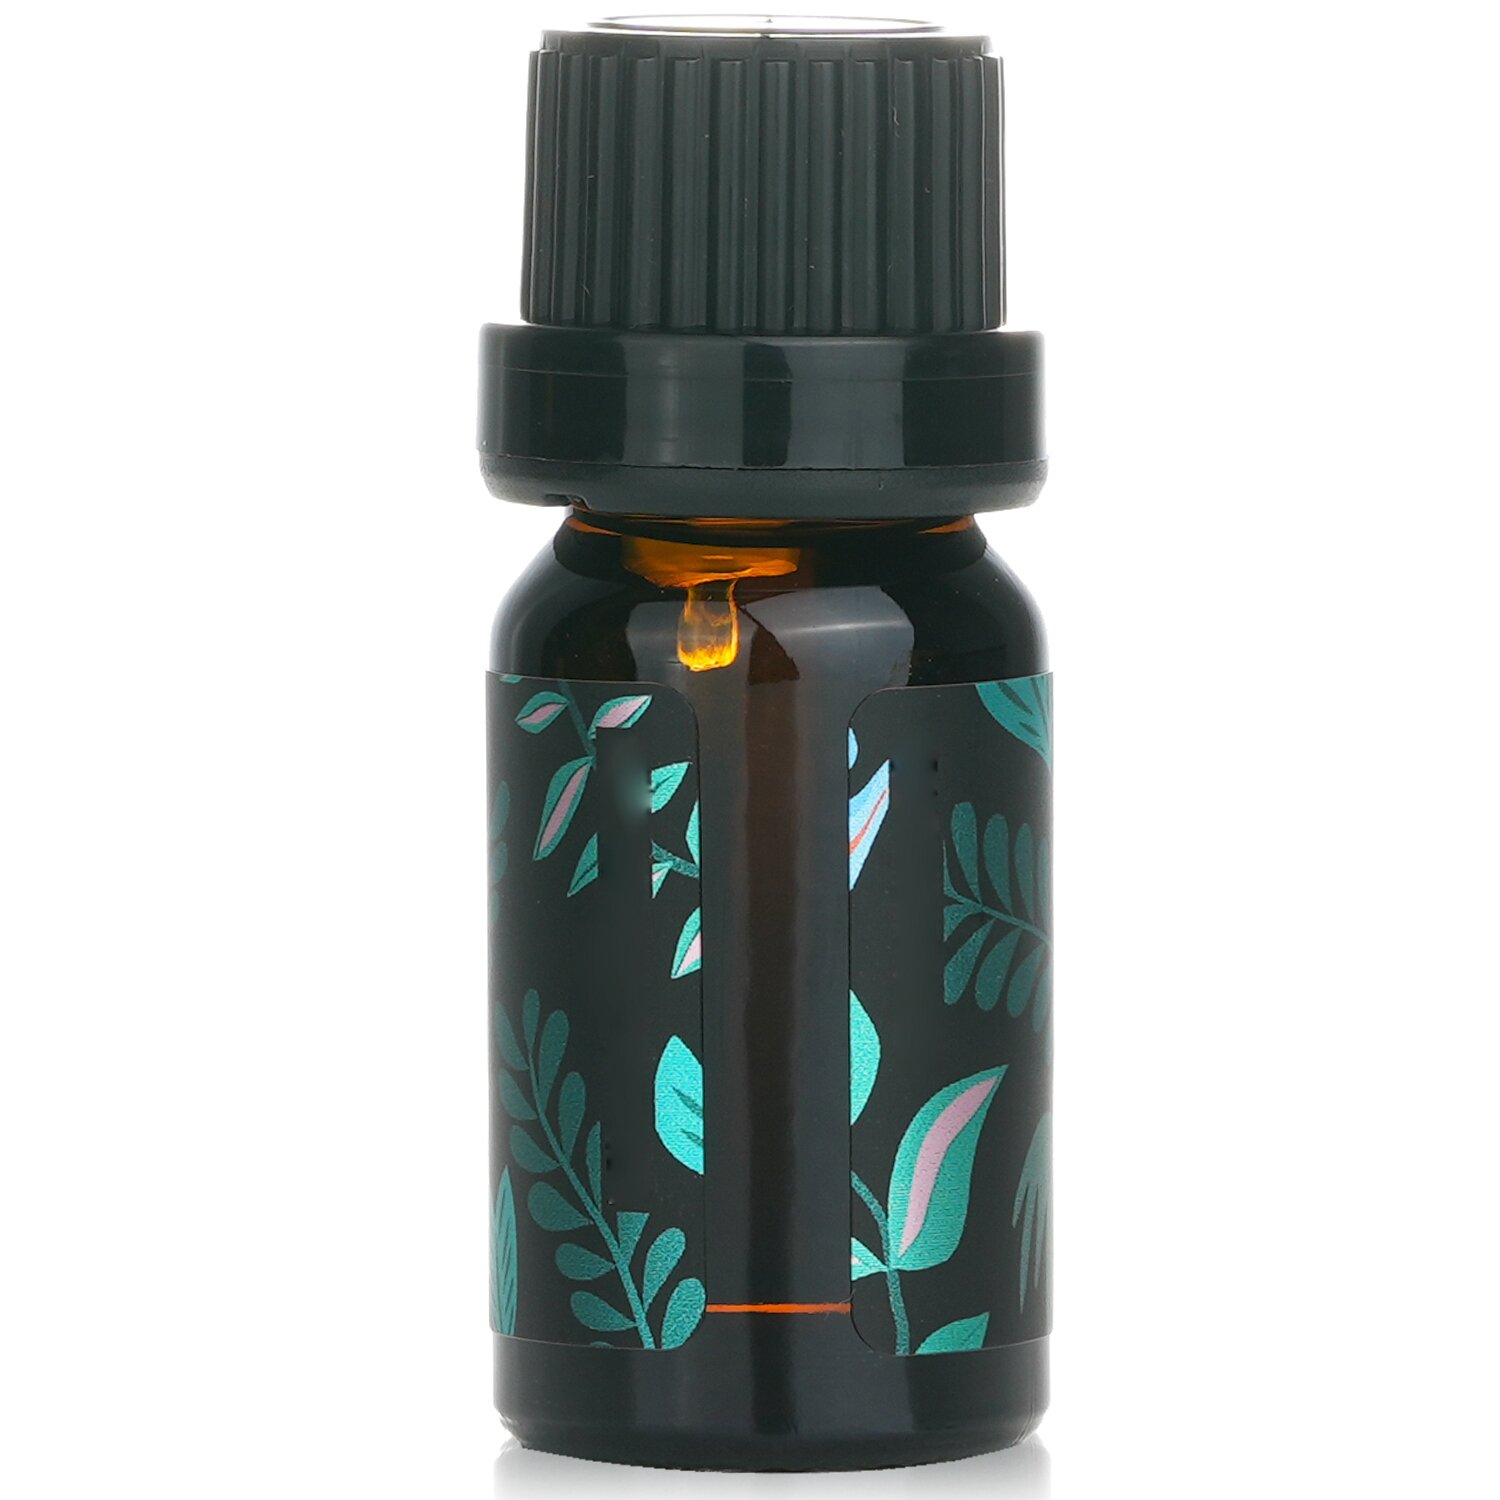 Natural Beauty Essential Oil - Lavender 10ml/0.34oz